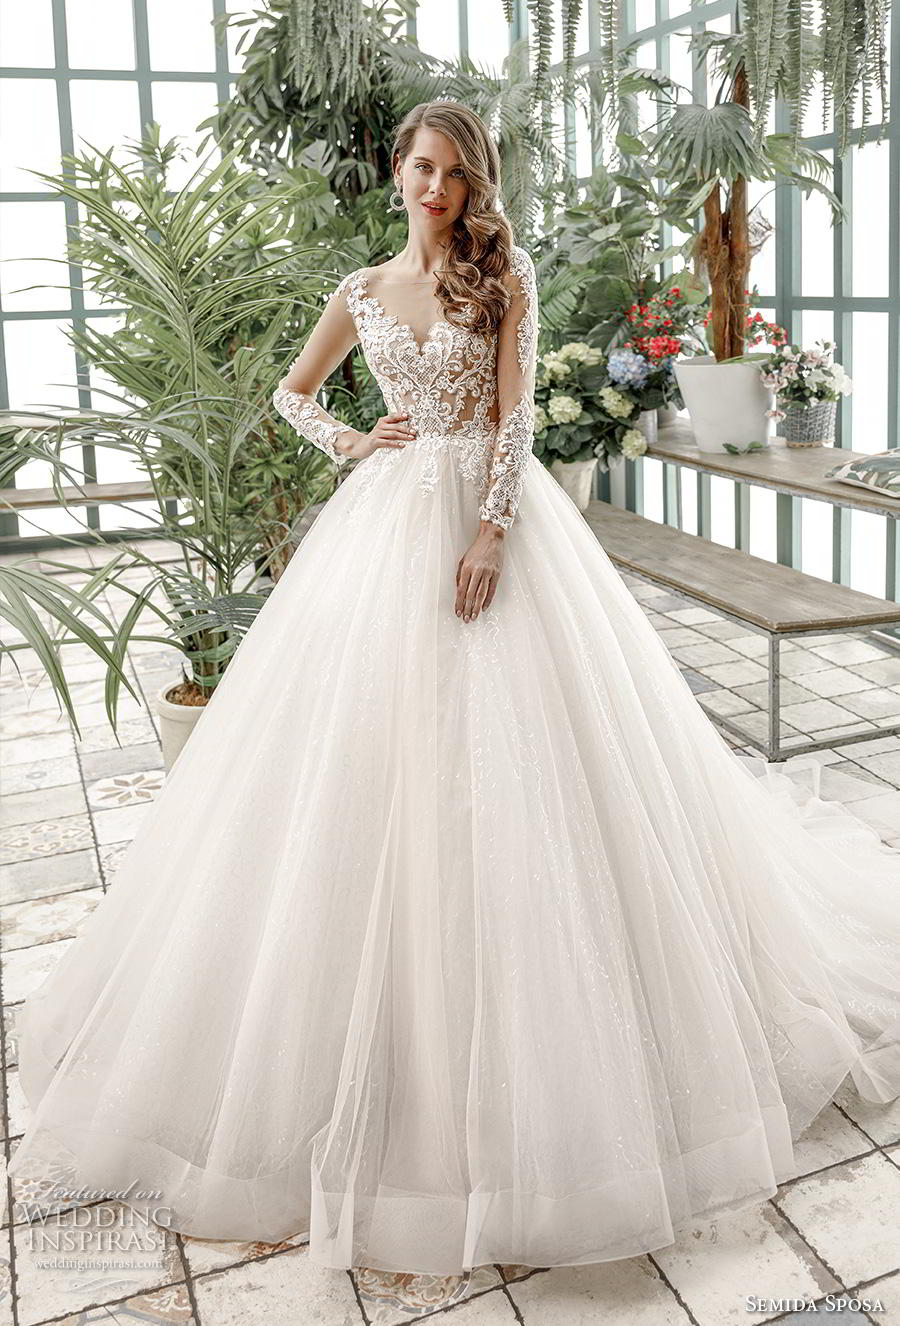 Semida Sposa 2020 Wedding Dresses — “Amazon” Bridal